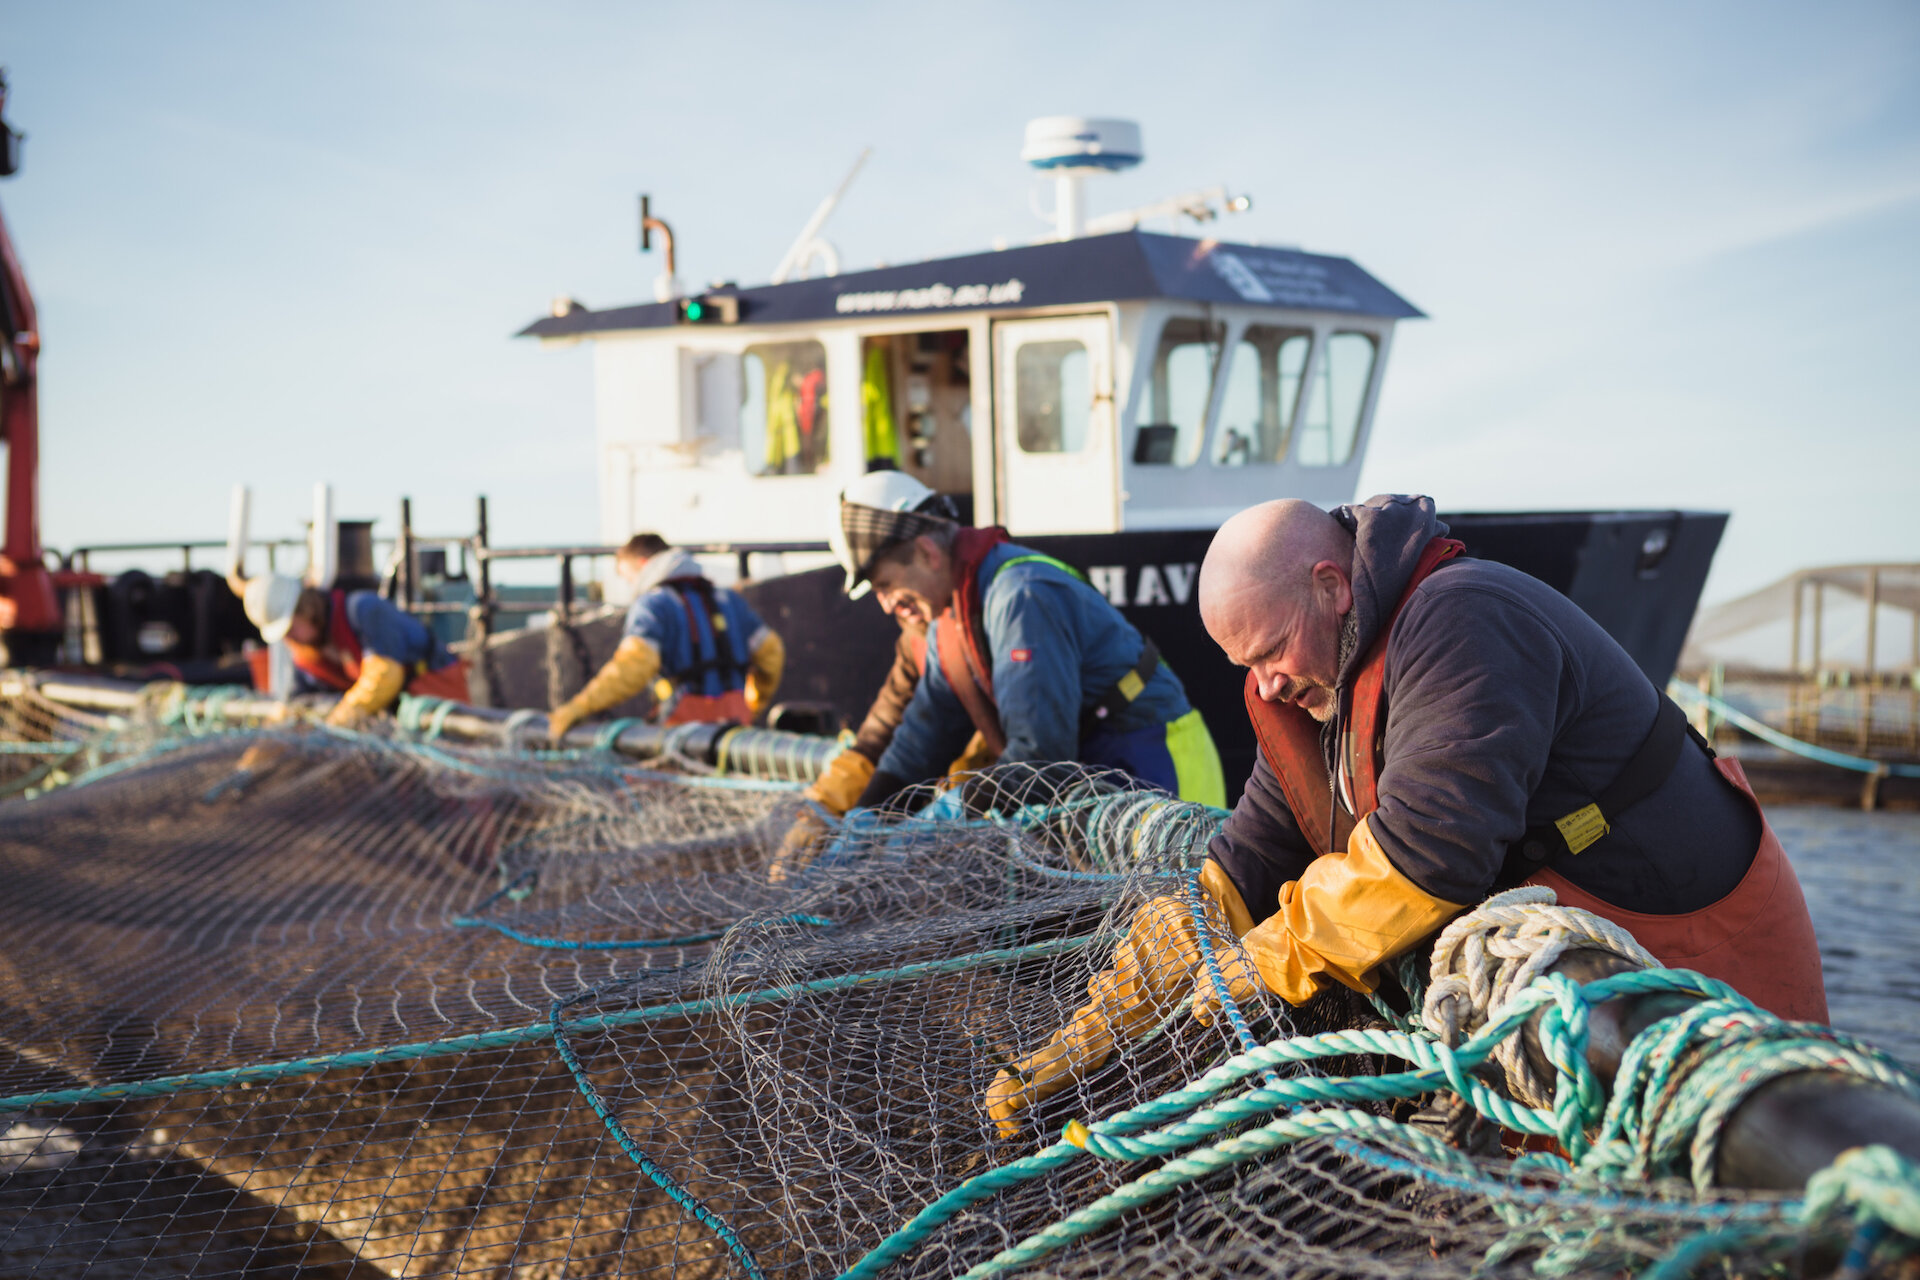 Salmon farming provides hundreds of jobs across Shetland.